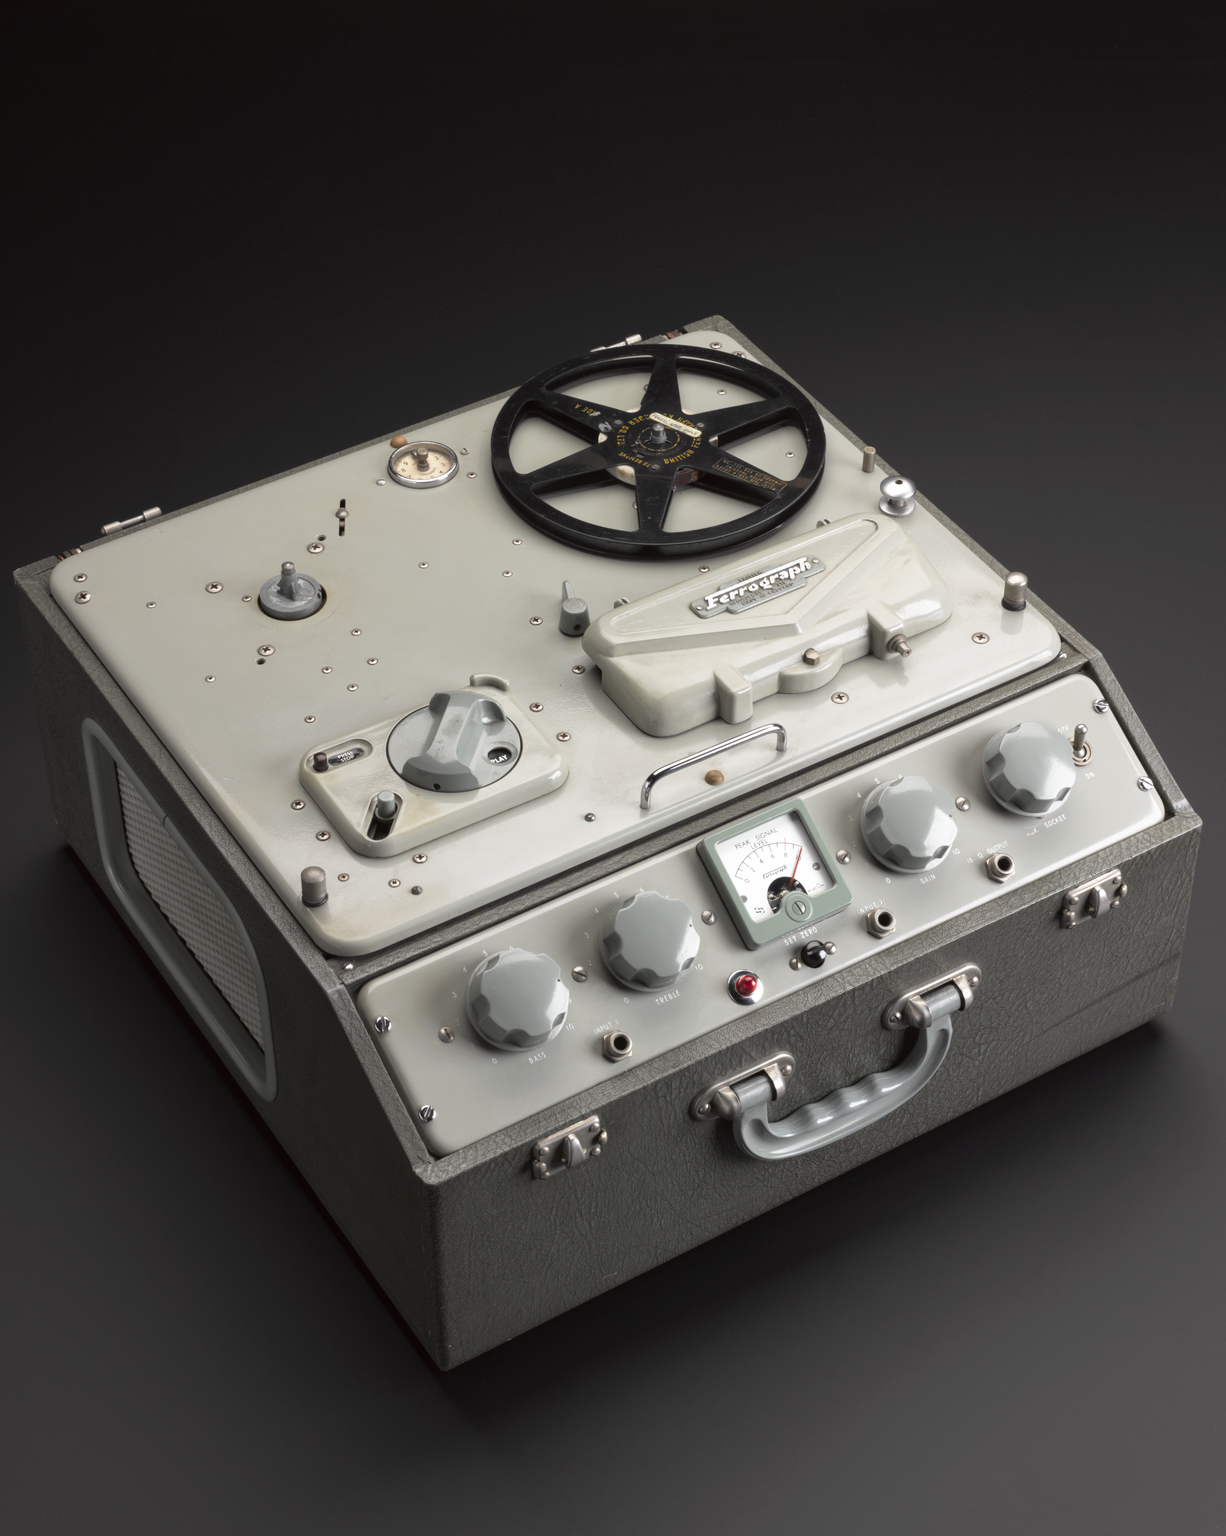 Ferrograph reel to reel tape recorder model 4A, c. 1960 (Science Museum, London)